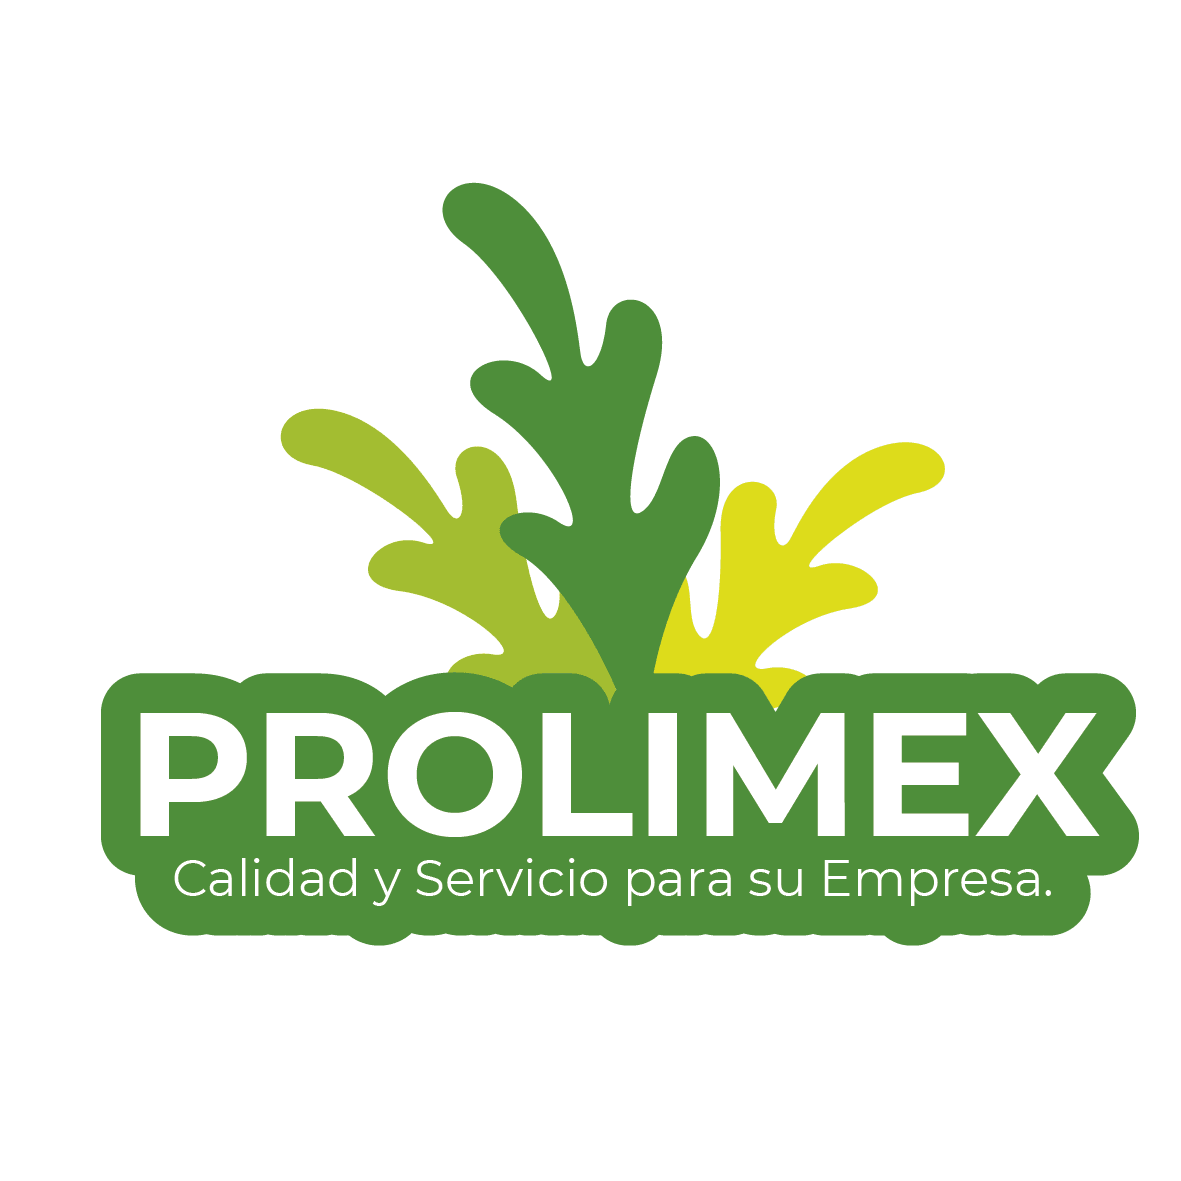 Prolimex